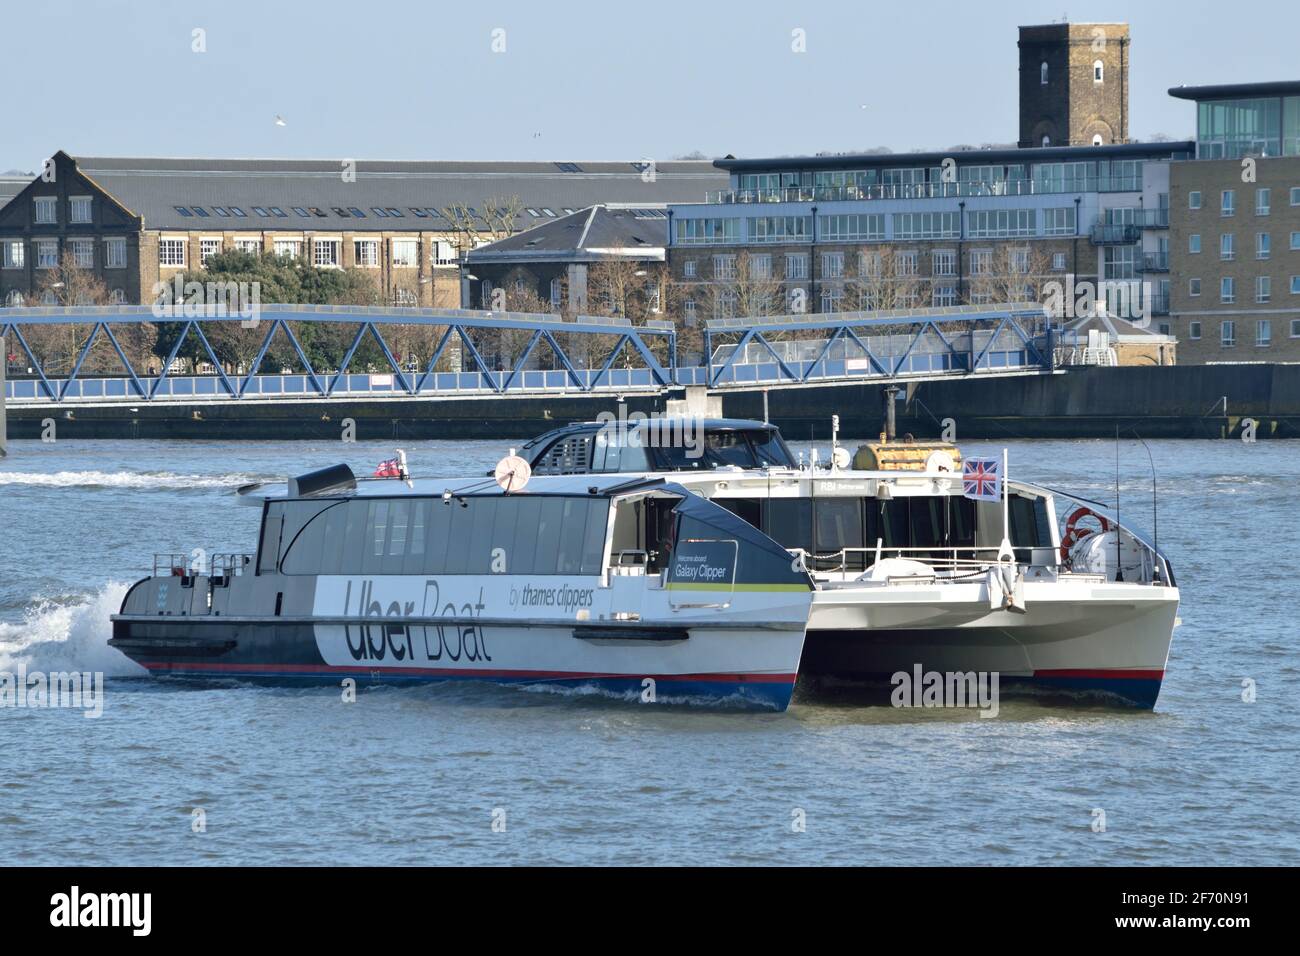 Uber Boat mit dem Thames Clipper River Bus Service Vessel Galaxy Clipper betreibt den Flussbusdienst RB1 auf dem Fluss Thames in London Stockfoto